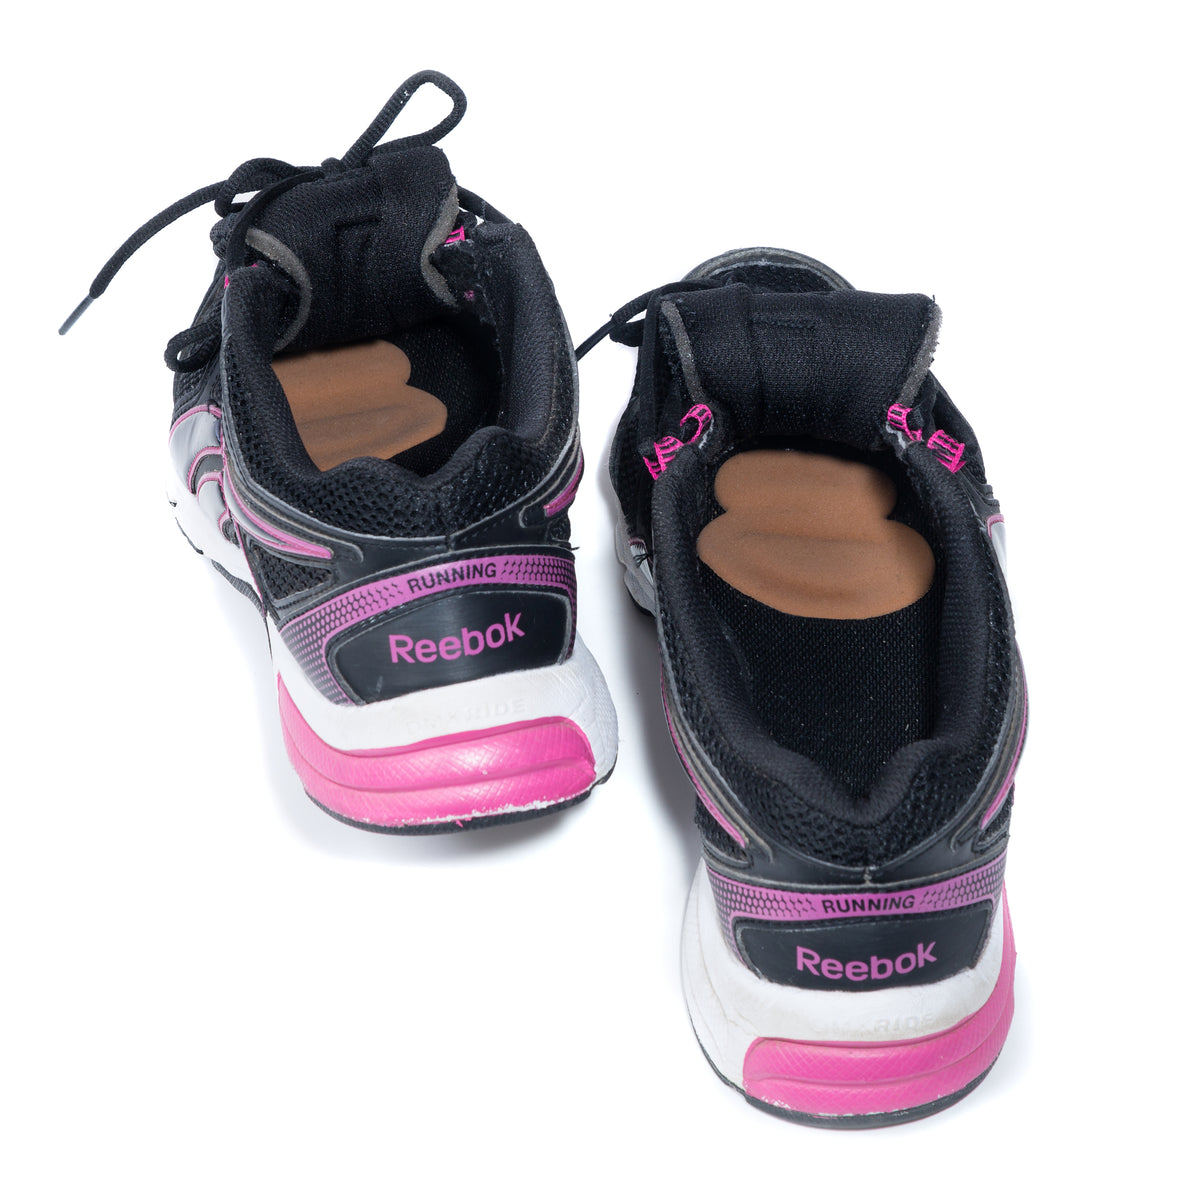 Shoe Cushions for Flats, Sports Shoes and Boots Rebounding Polyurethane Ergonomic  Custom  (US $17.50 1 pr)